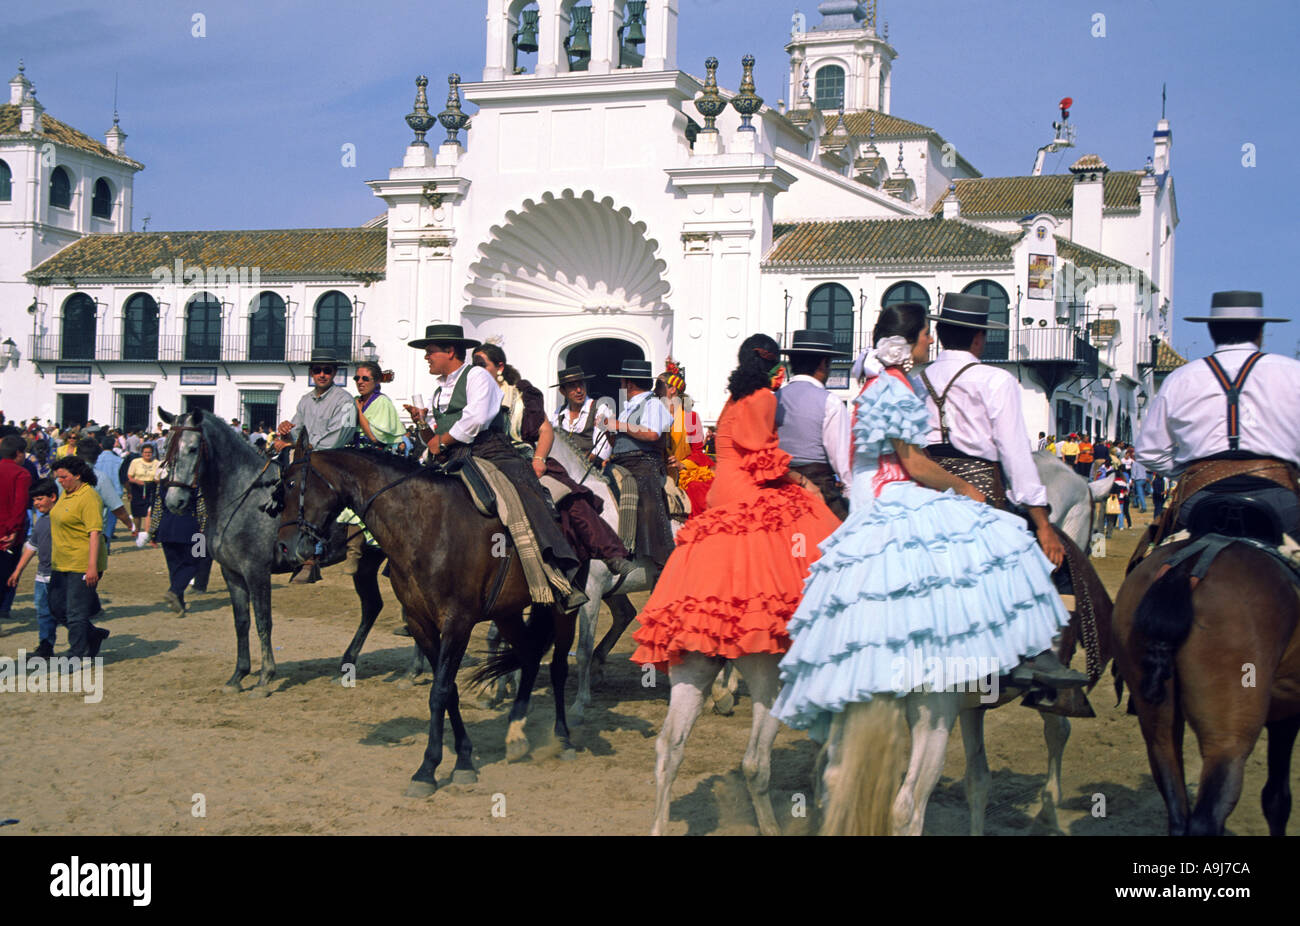 Andalusien el Rocio Romeria Pilger auf Pferden mit traditionellem Flamenco Kostüme Stockfoto